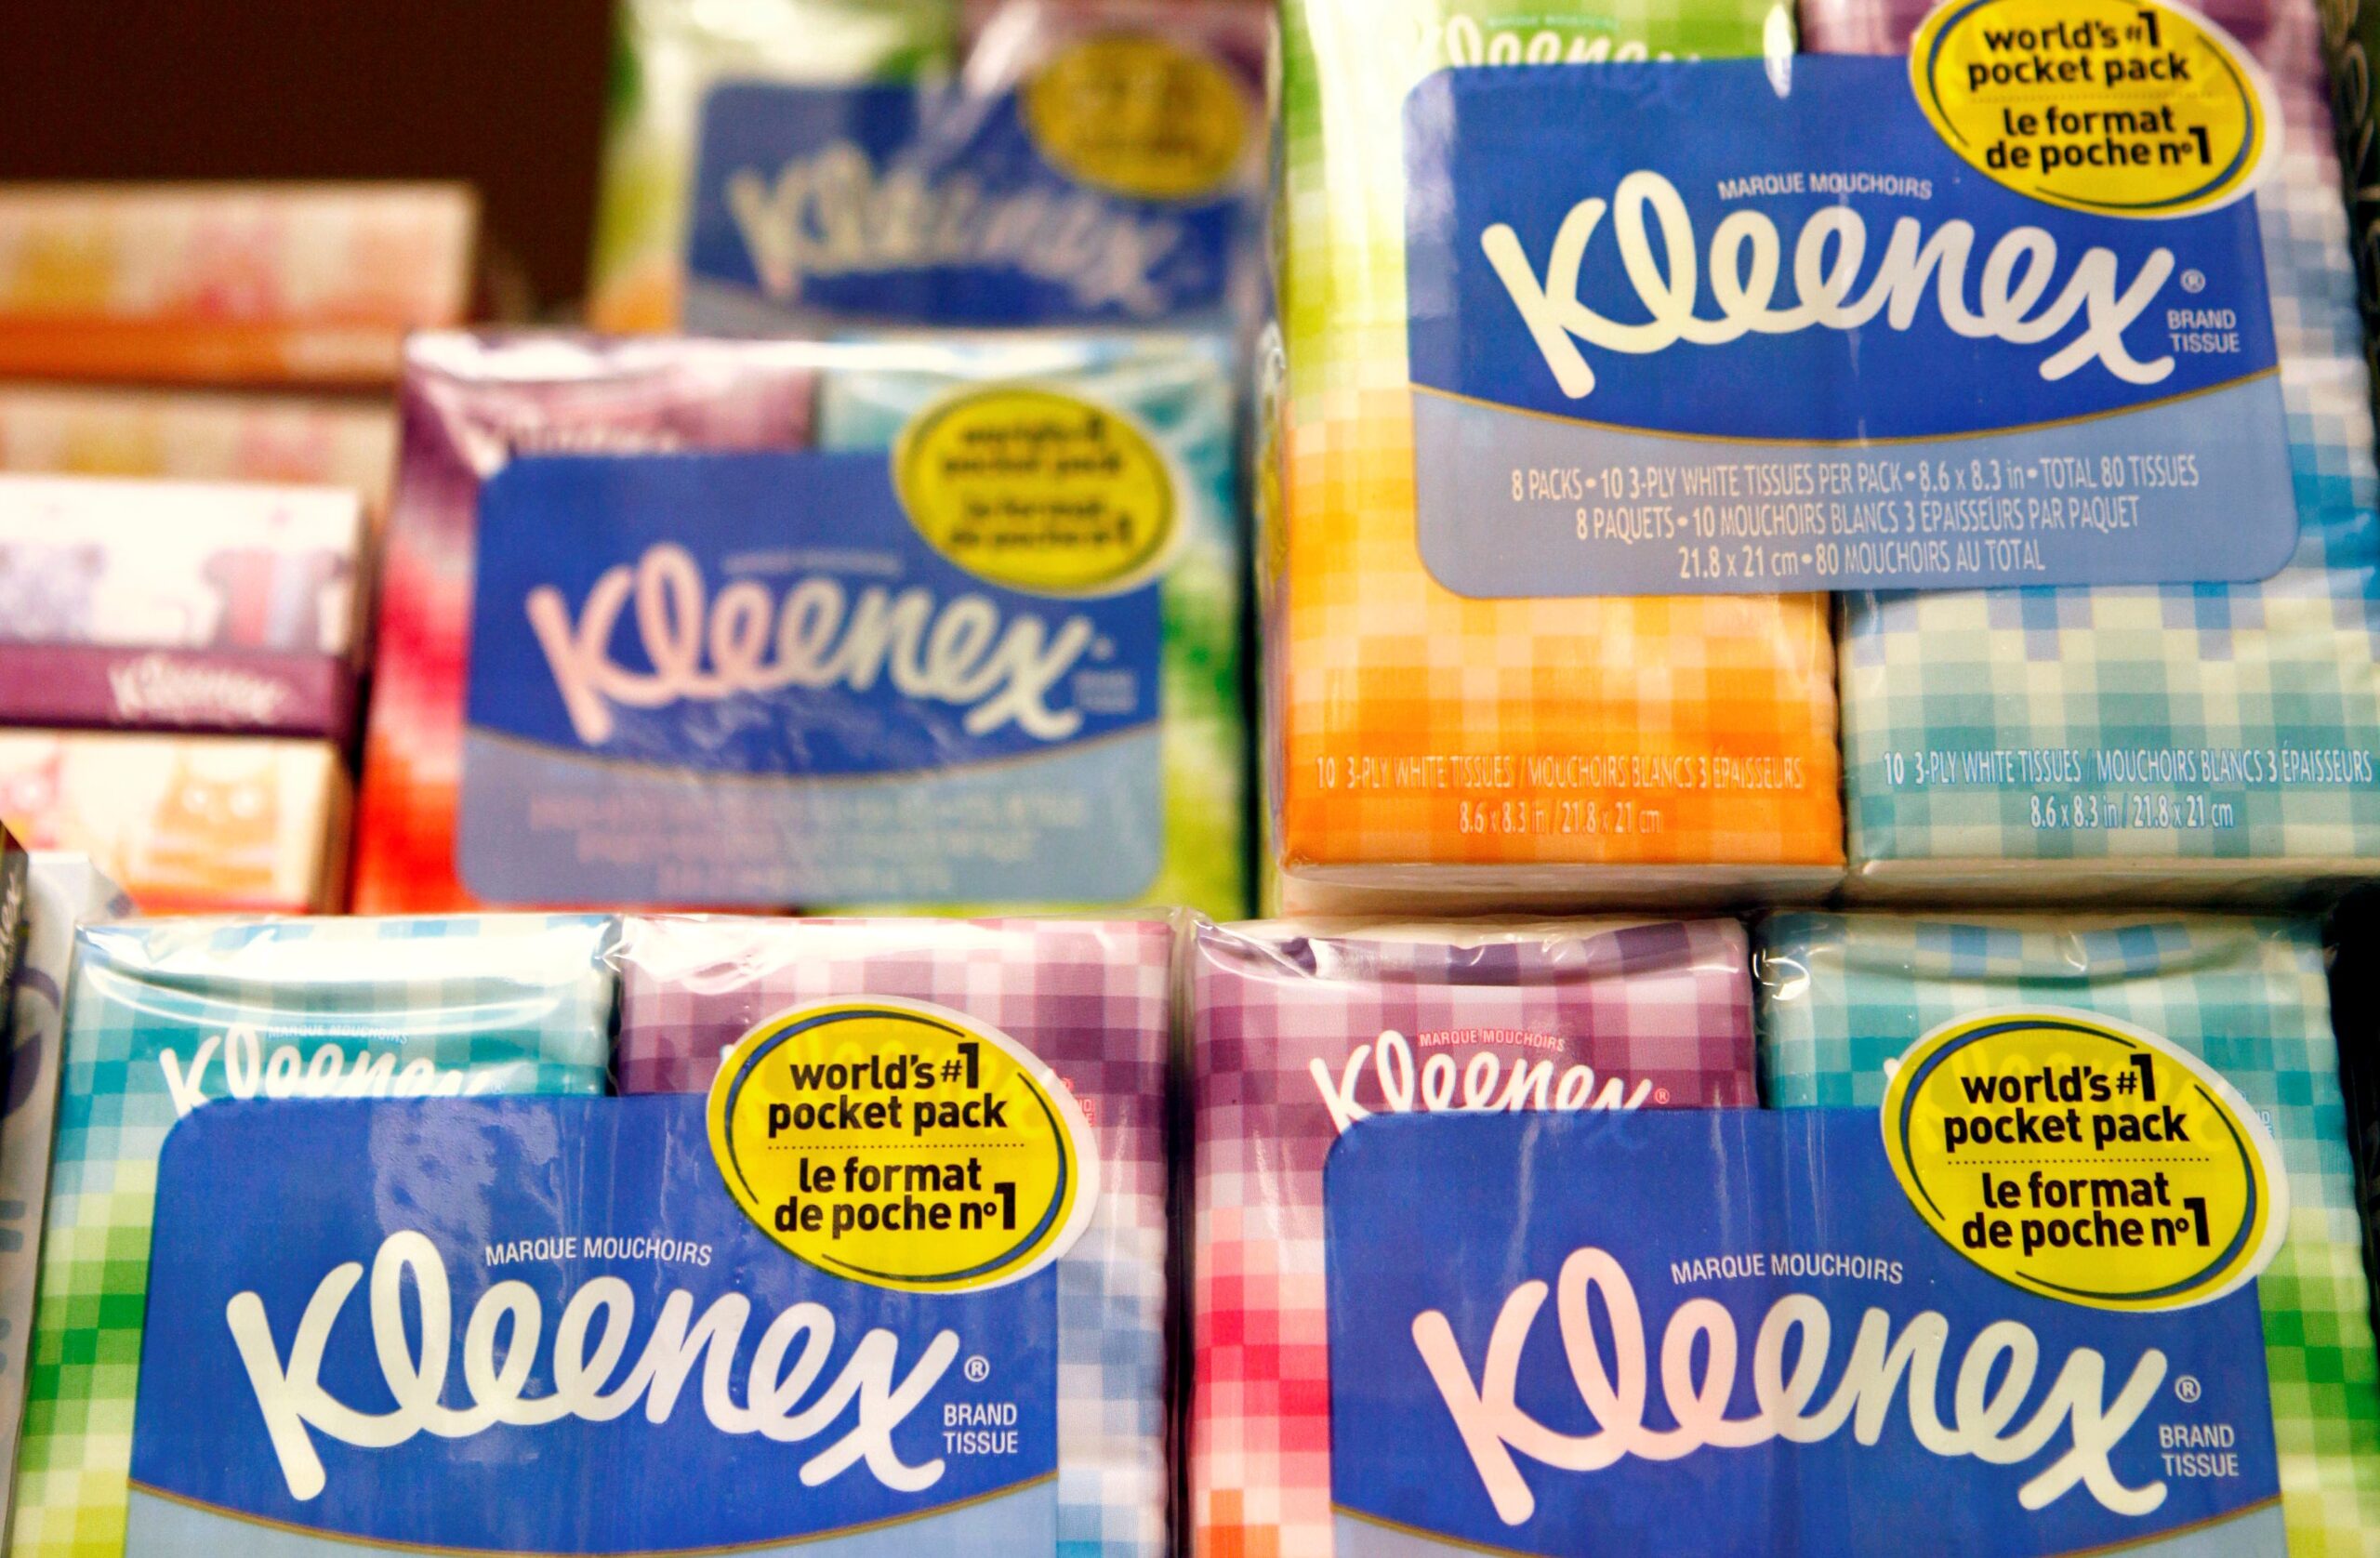 Packages of Kleenex tissues